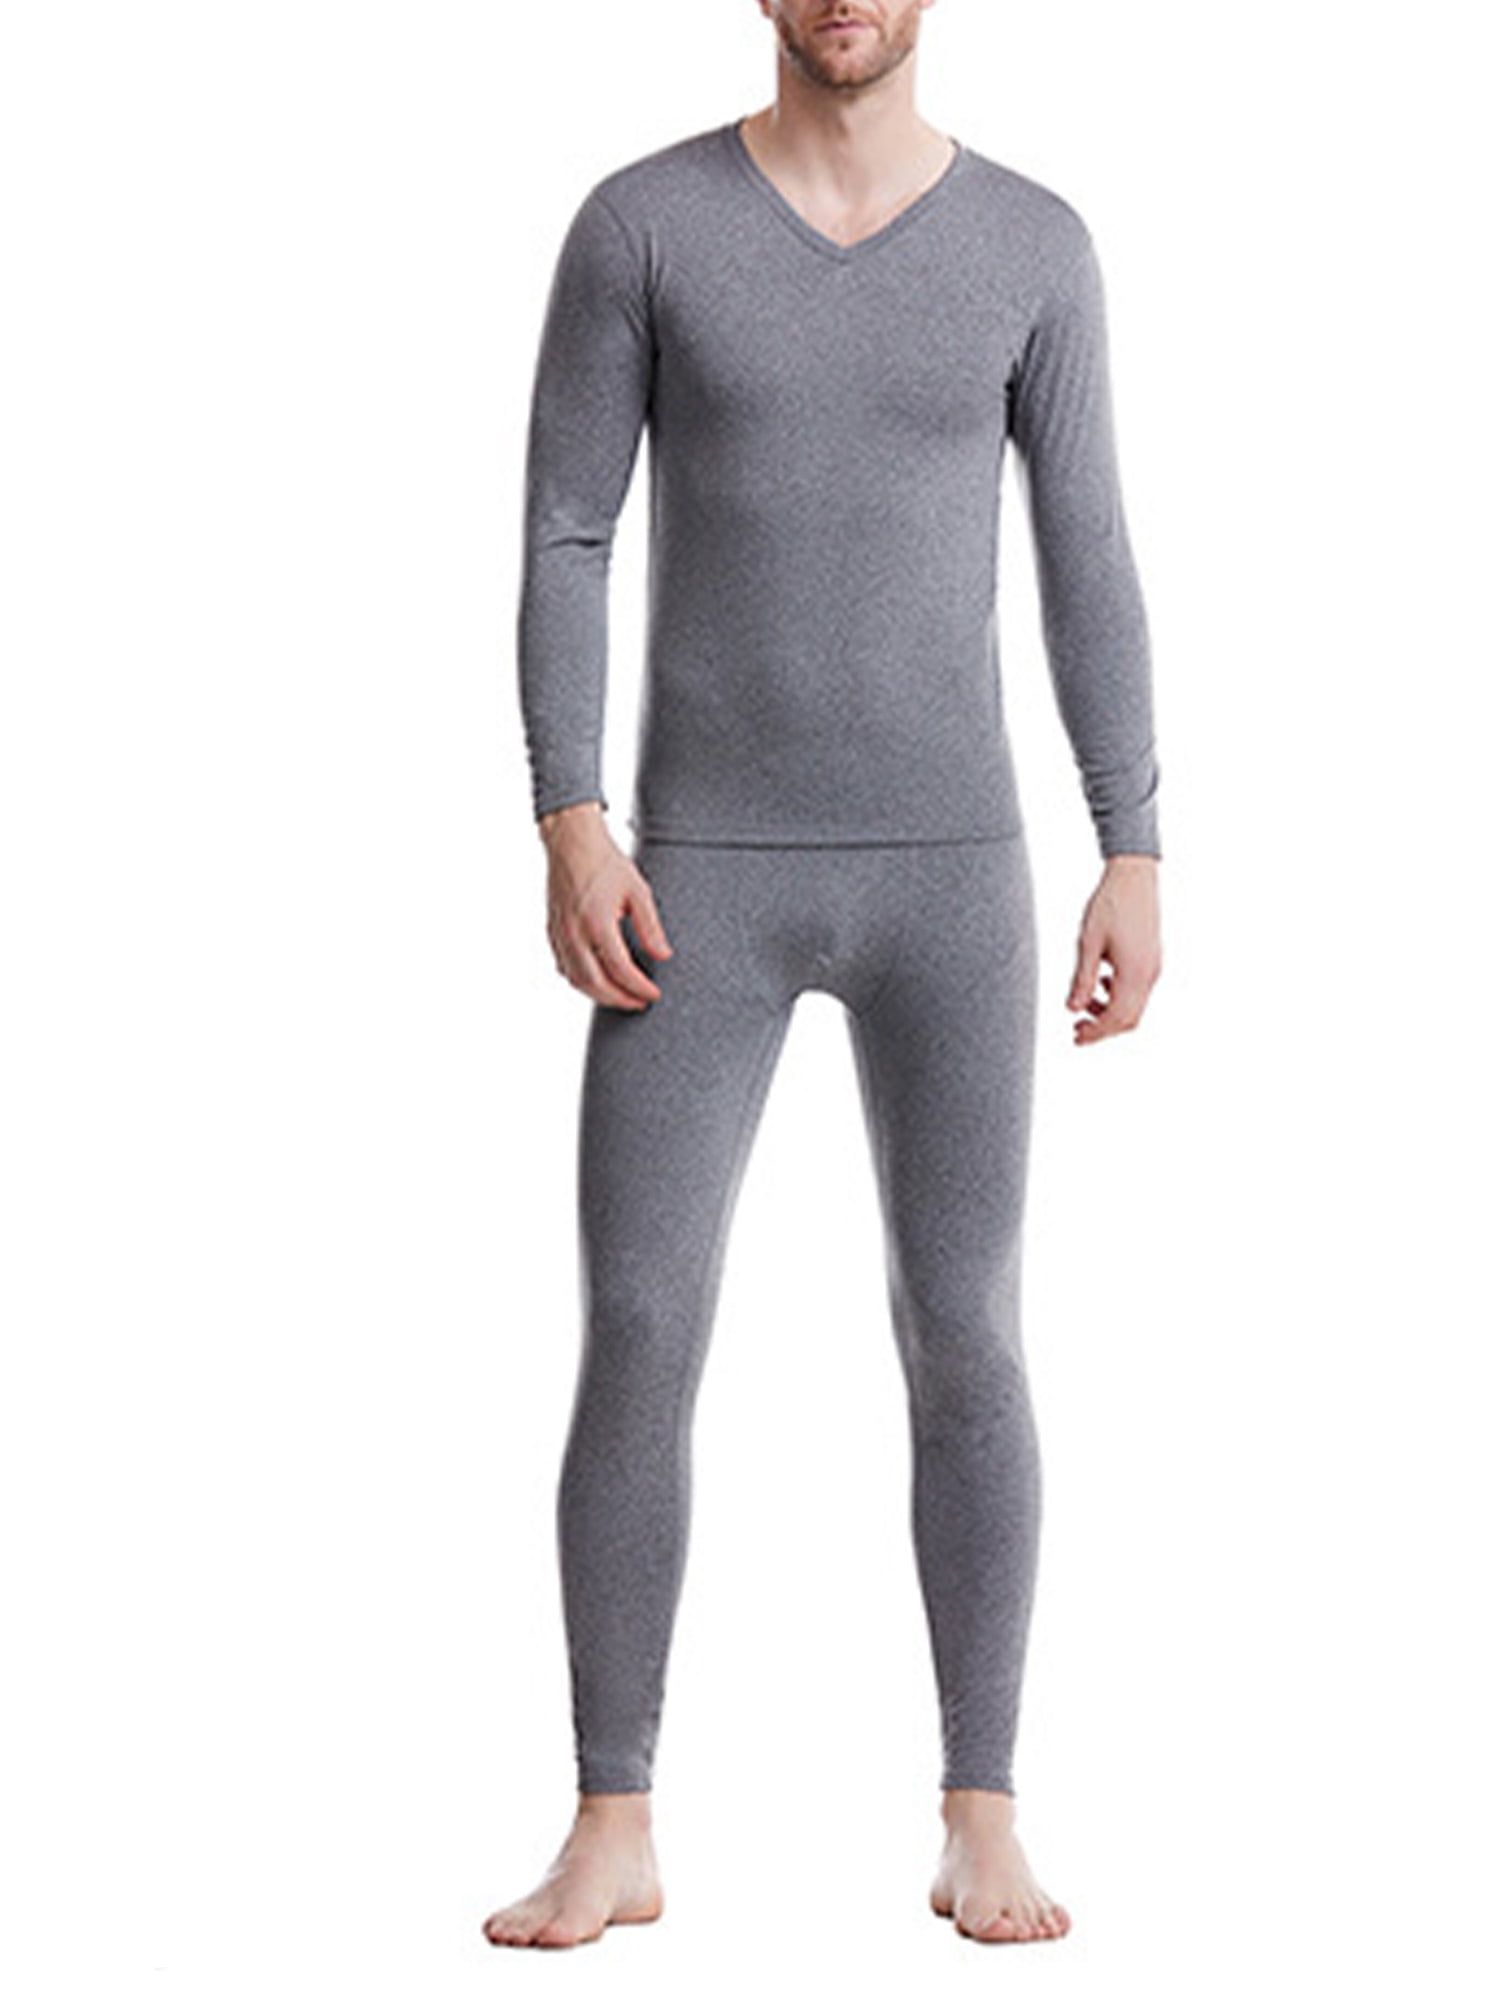 Men's Winter Sports Base Layer Thermal Fleece Underwear Shirts Pants Leggings 